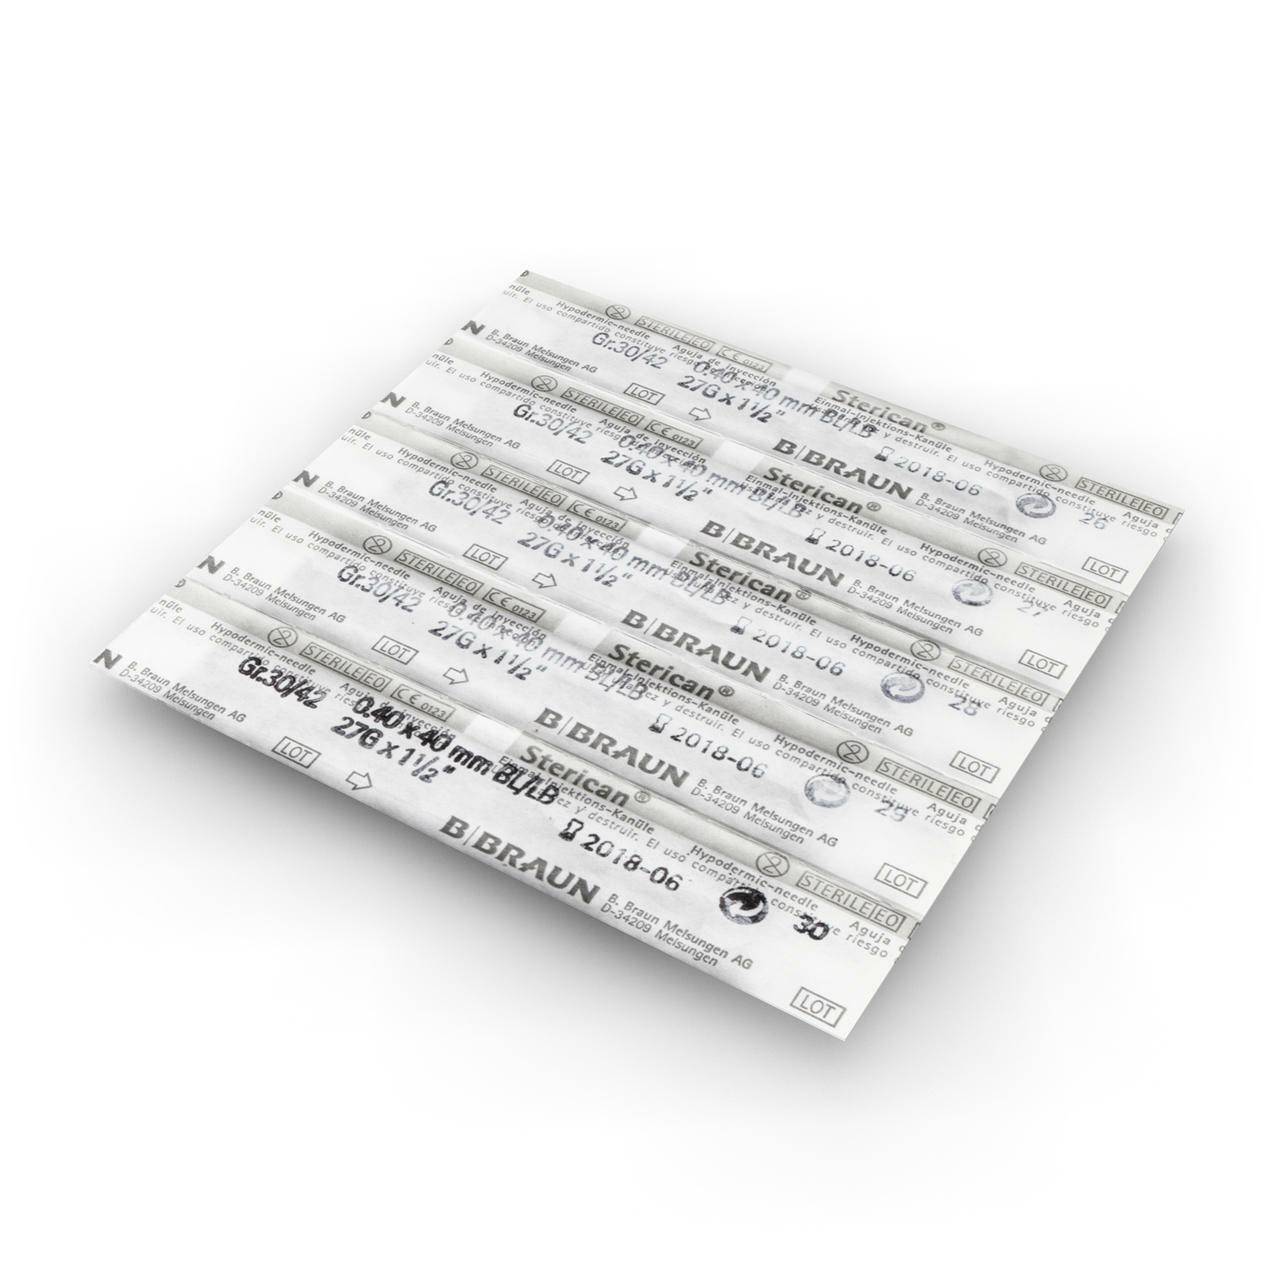 27g Grey 1.5 inch BBraun Sterican Needles. - UKMEDI